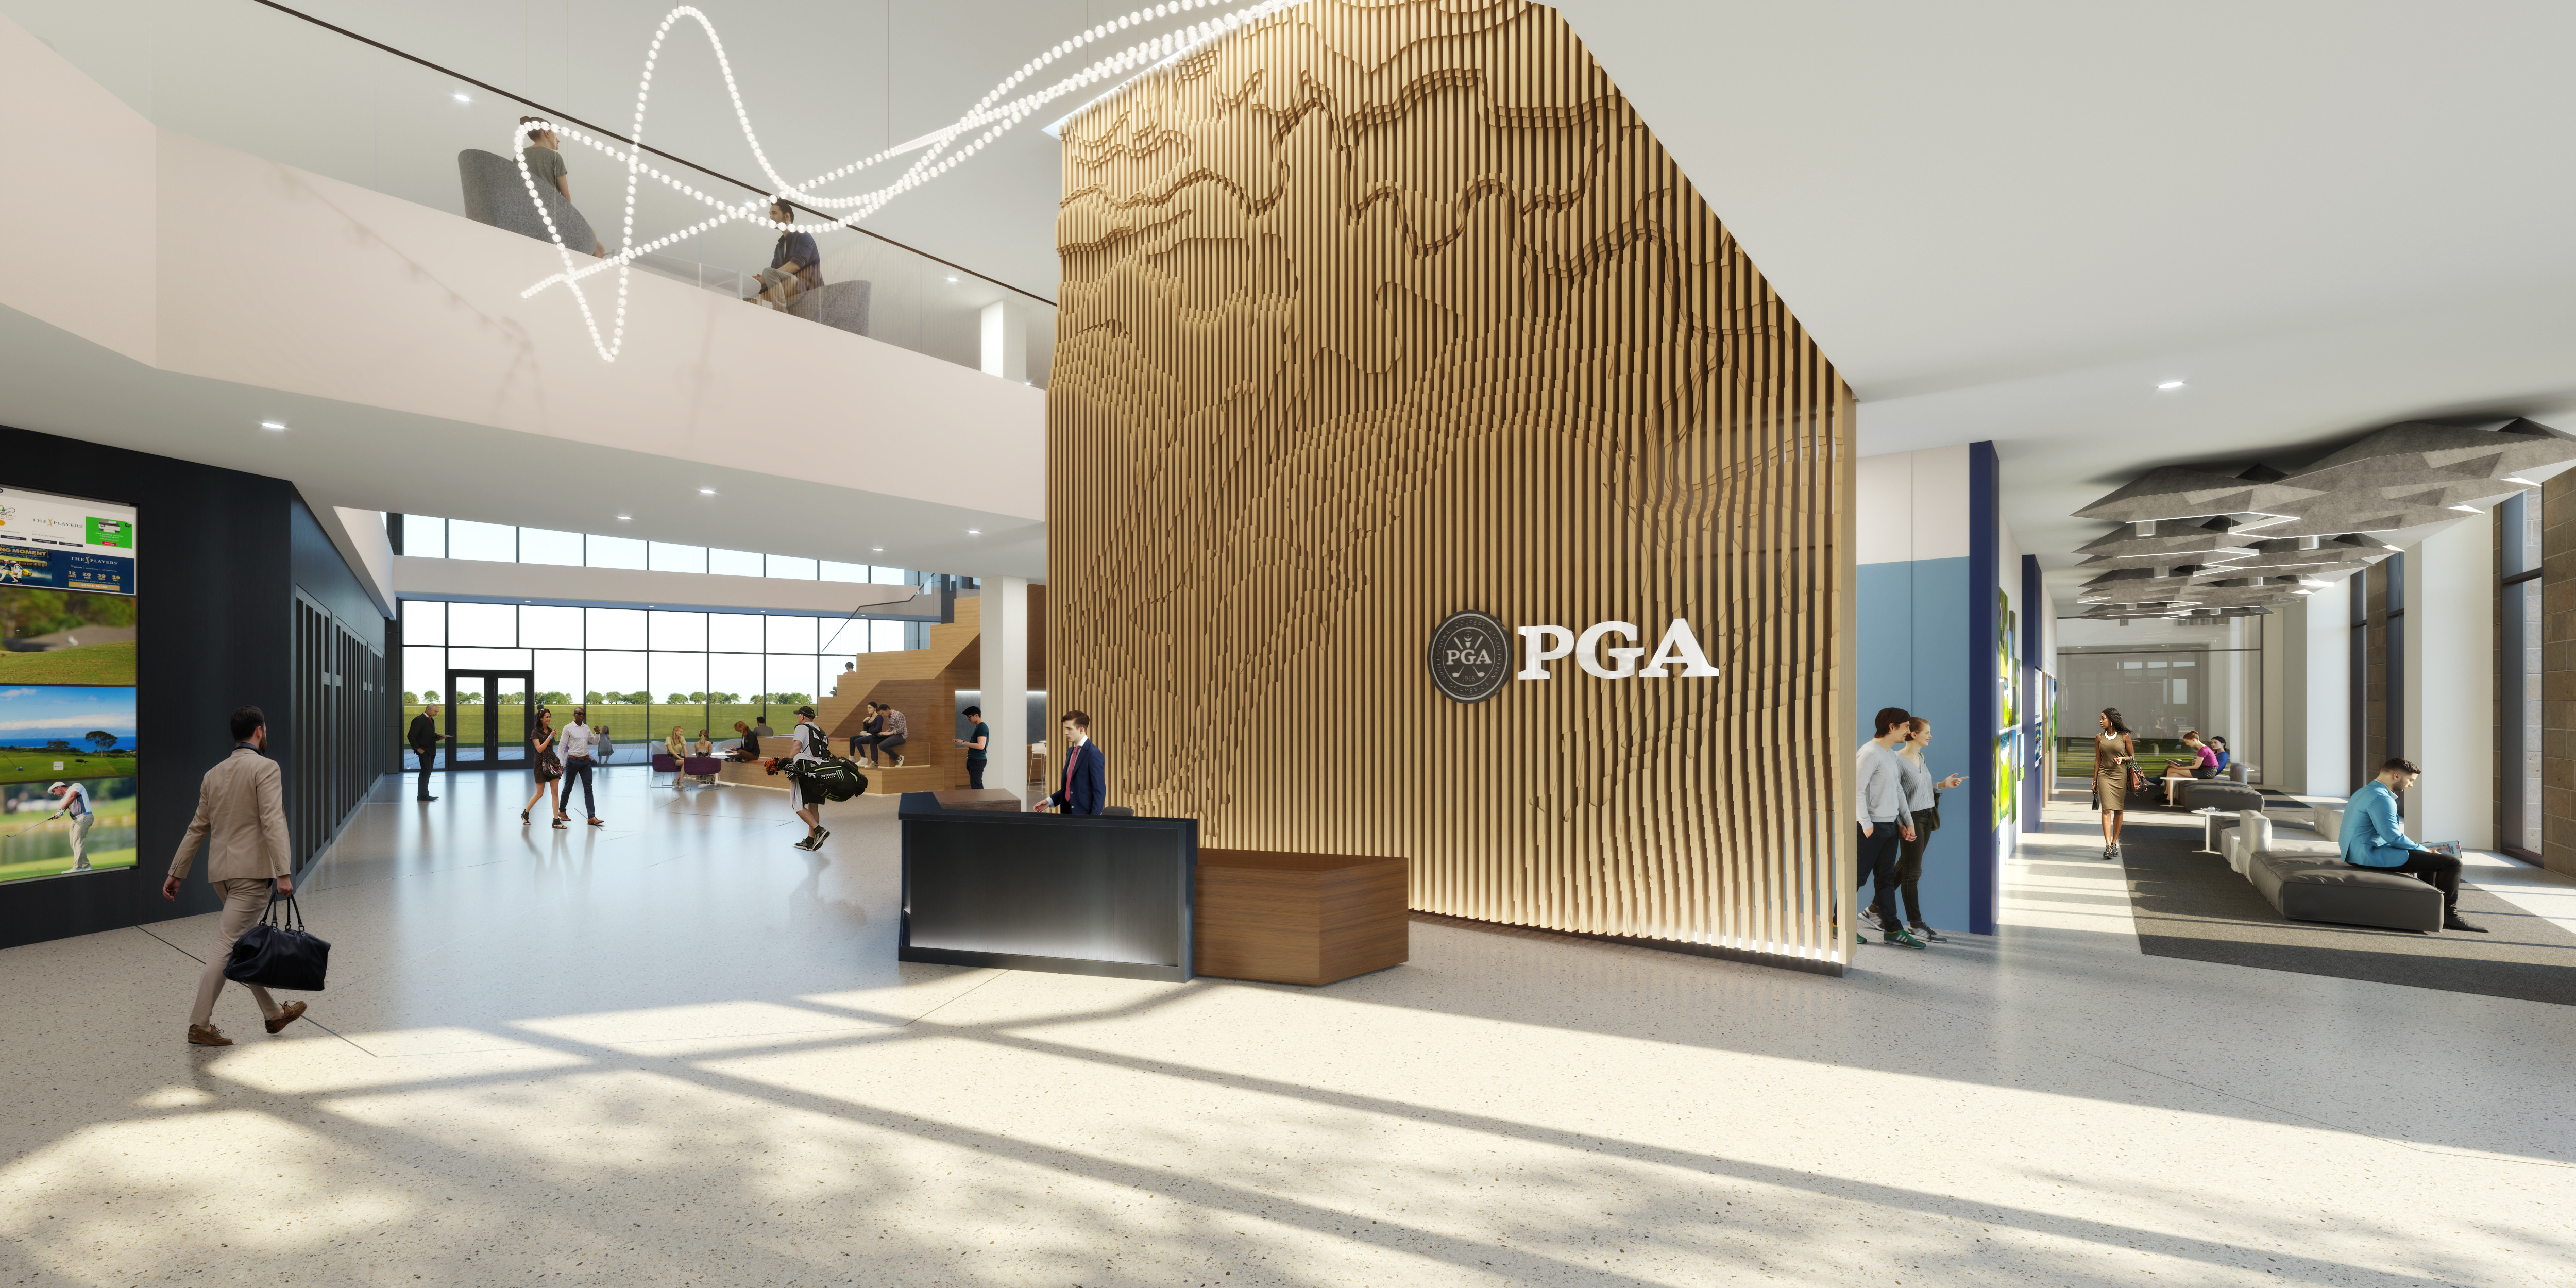 Indoor rendering of the new PGA of America headquarters lobby.